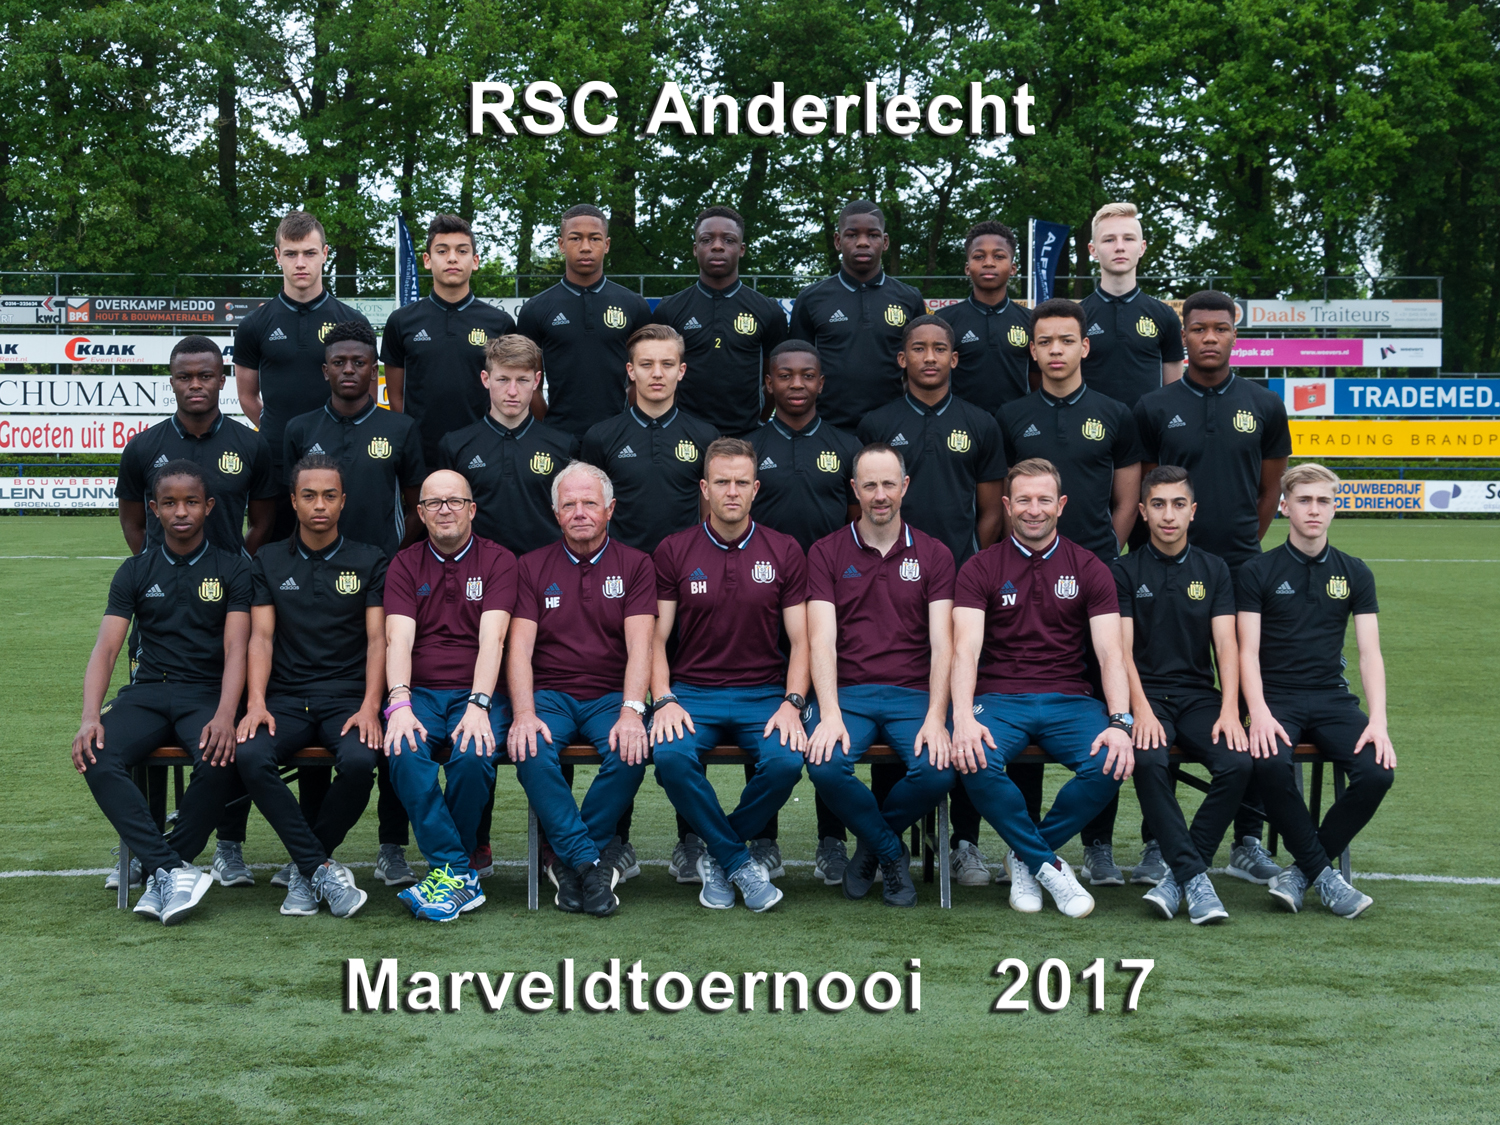 RSC Anderlecht – Marveld tournament